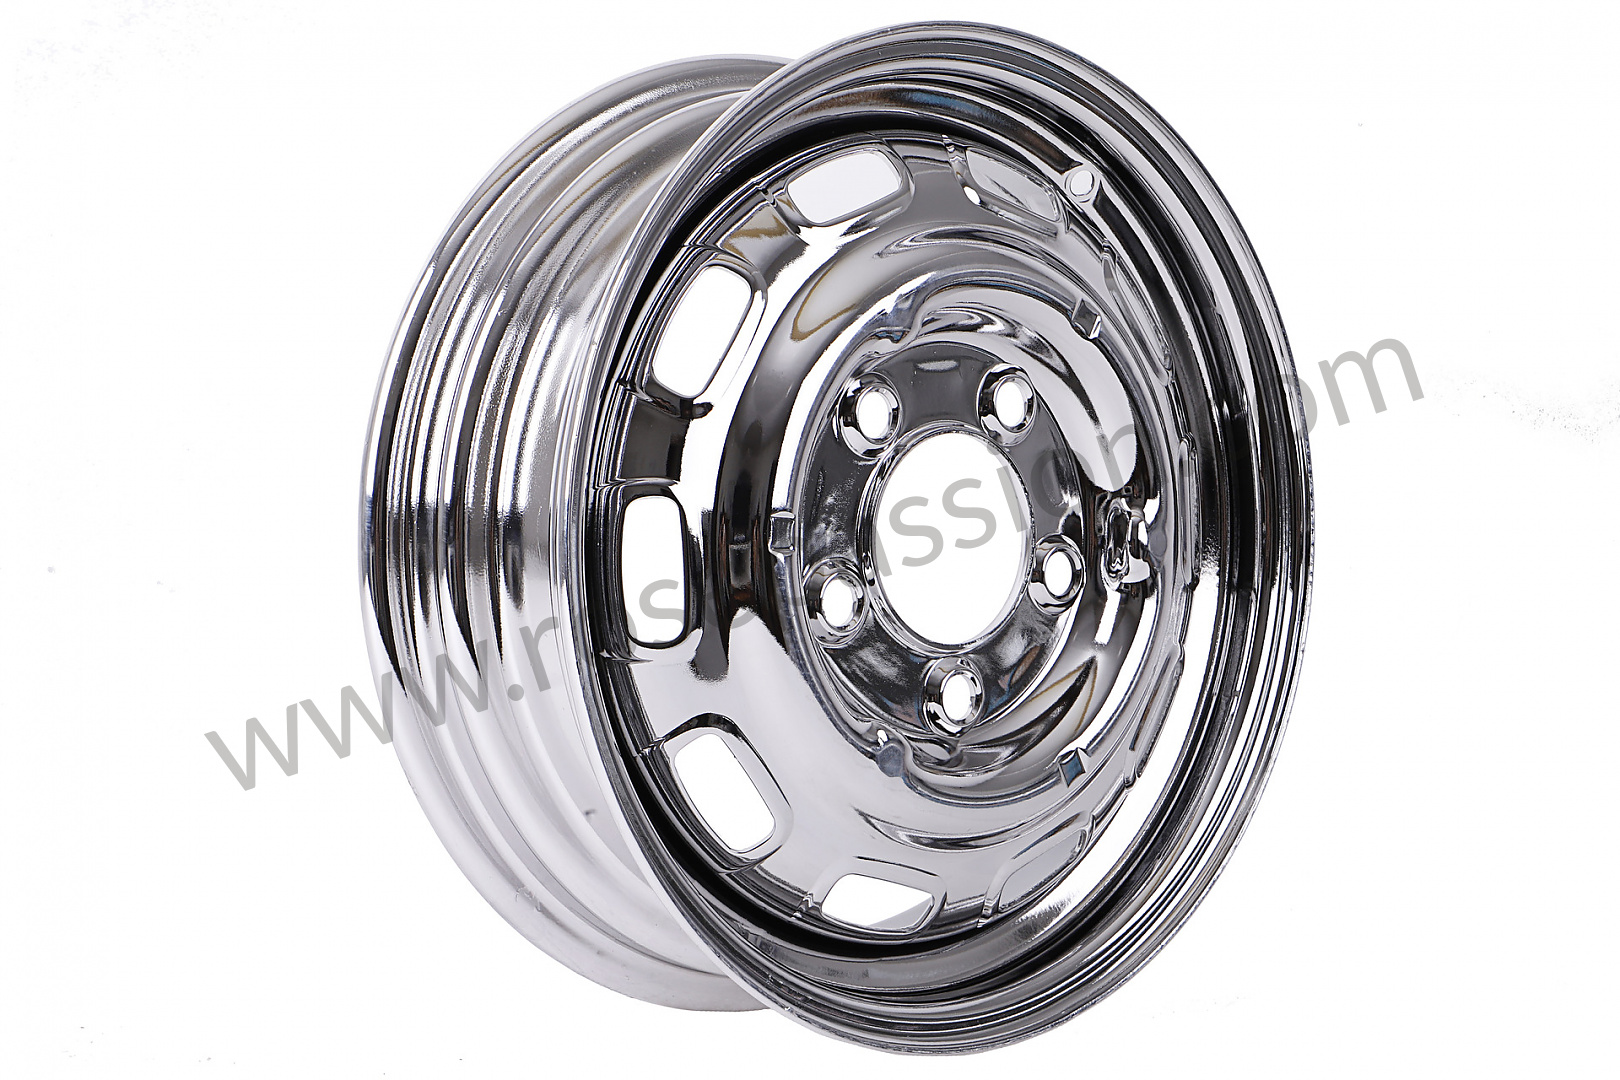 P6021 Wheel Rim With Punched Disc 5 1 2 J X 15 H2 Et 42 Chrome Chrome Chrome Chrome 5 5 X 15 Inches For Porsche